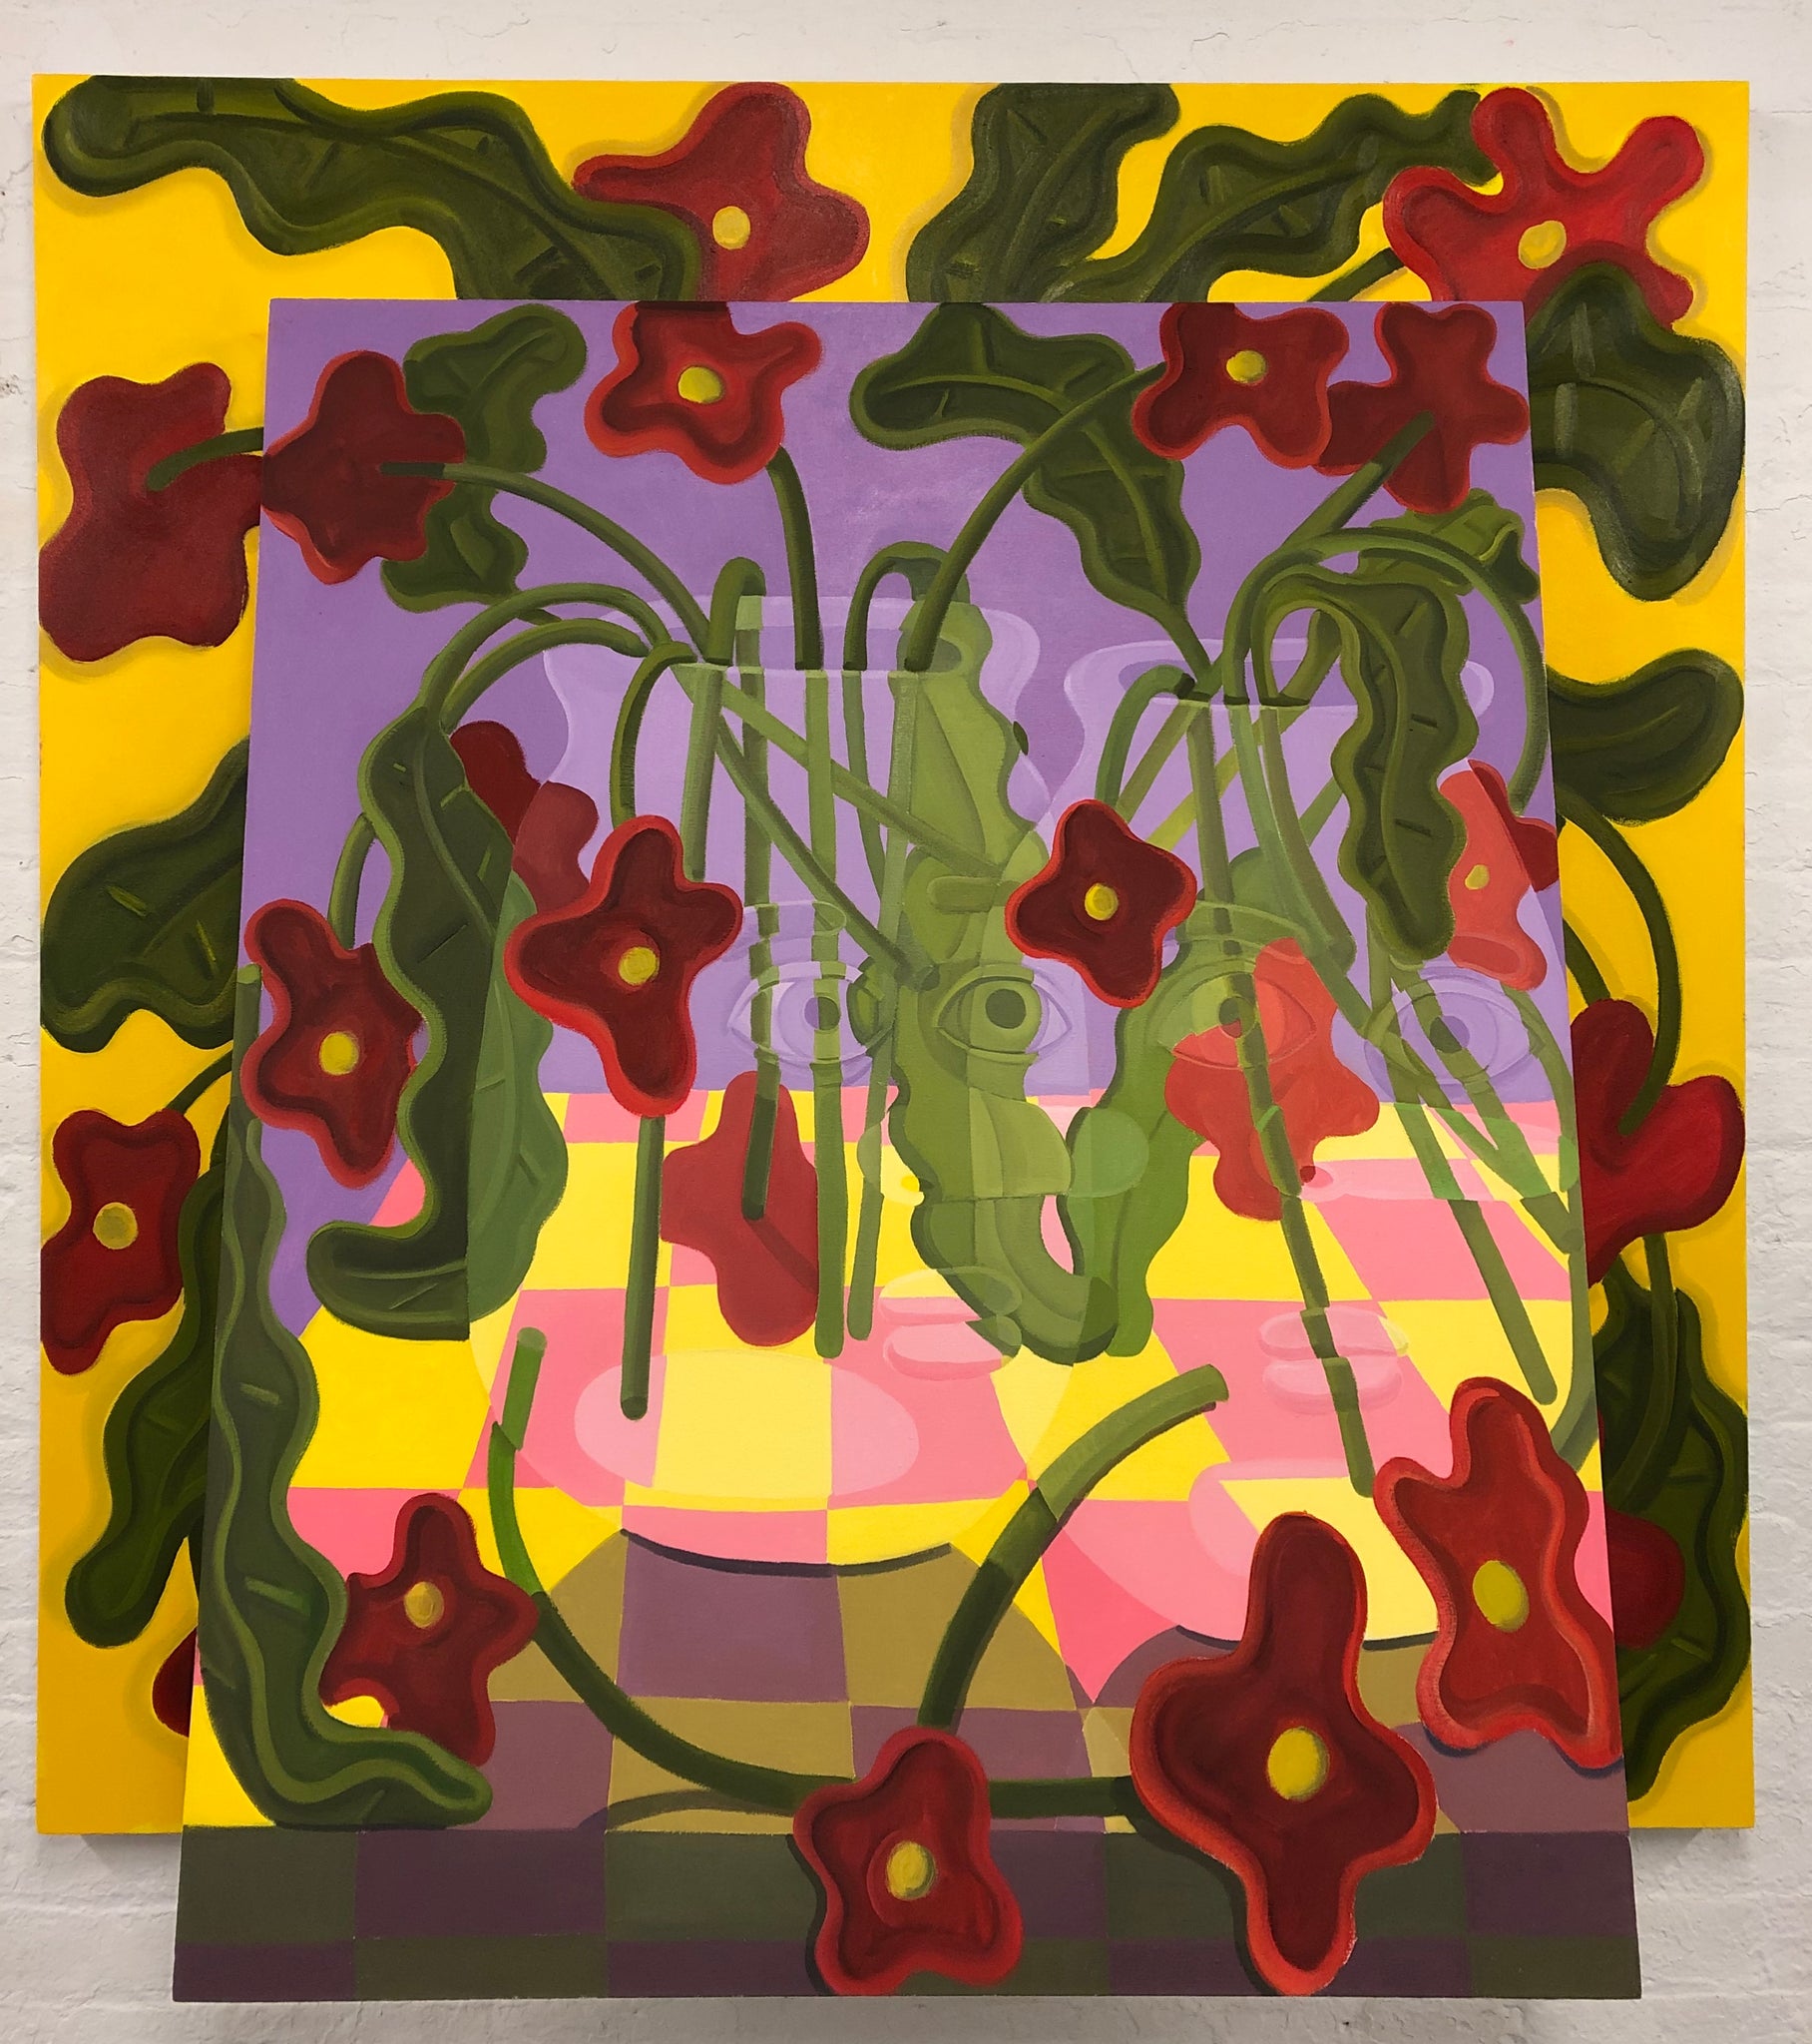 Michael Stillion, "Purple, Yellow, Pink"